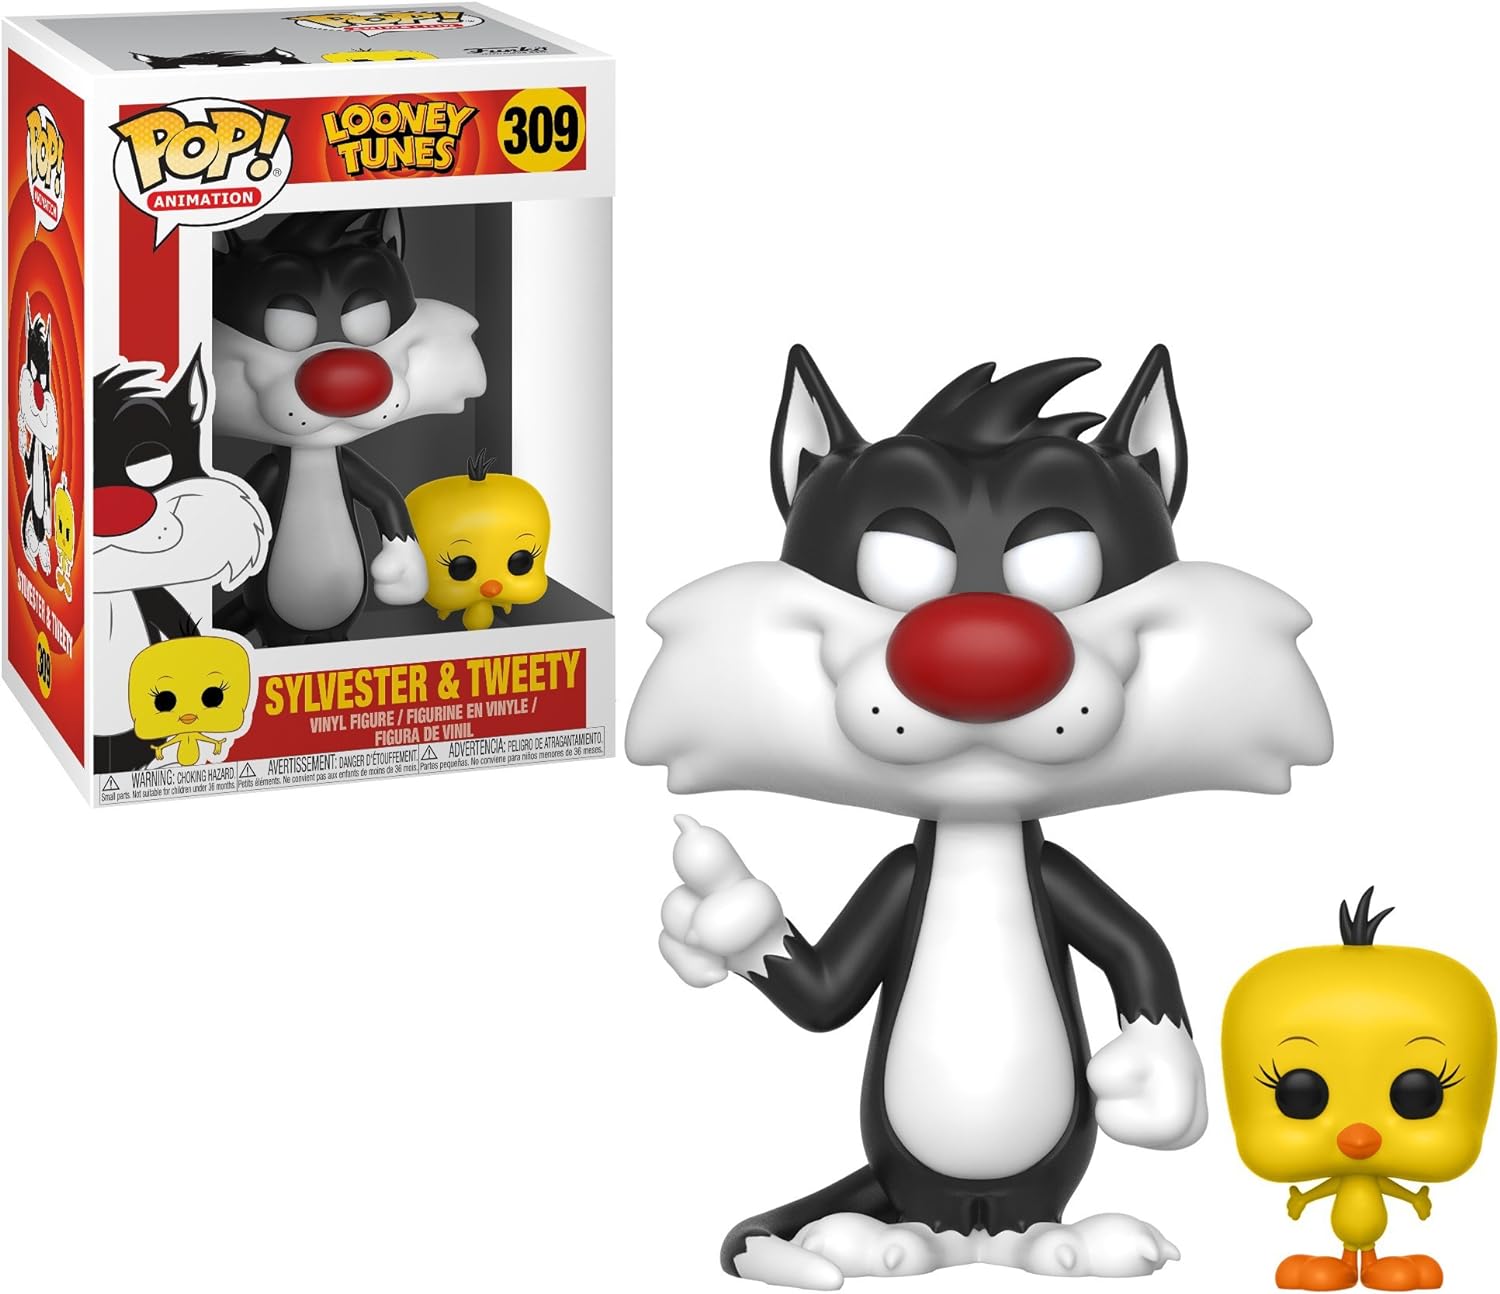 Looney Tunes: Sylvester & Tweety Pop! Vinyl Figure (309